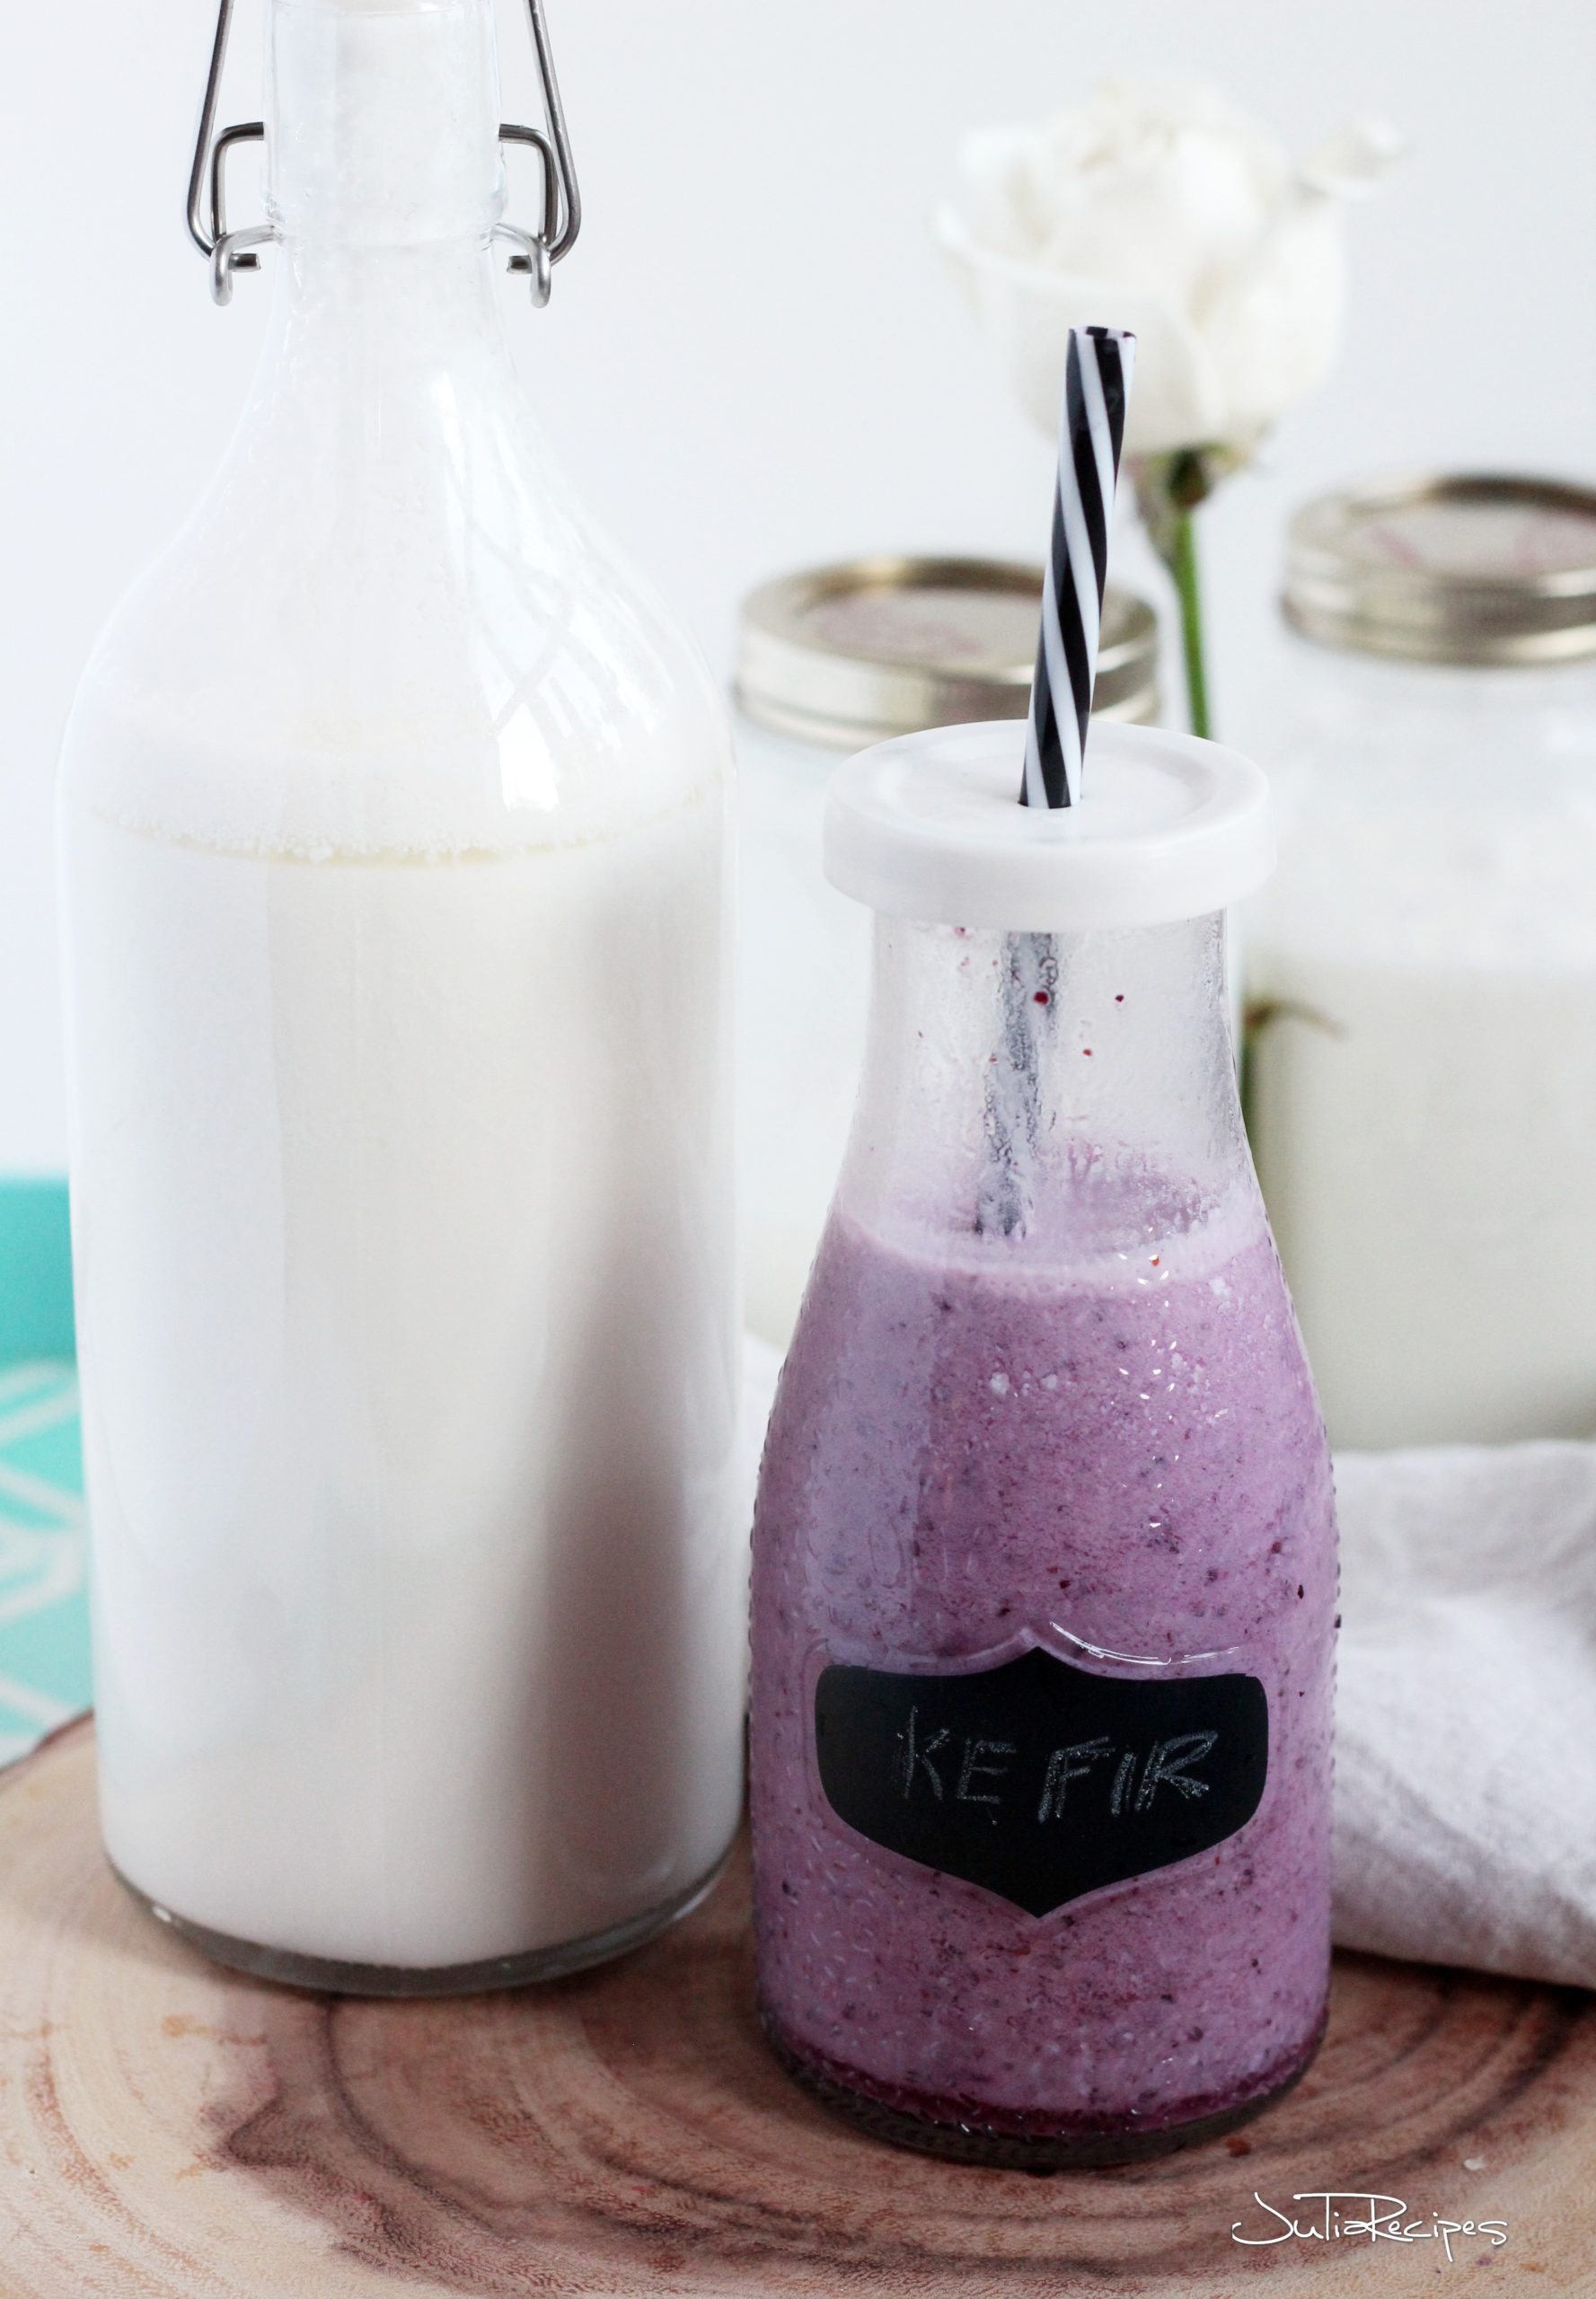 Blueberry kefir in drinking jar with plain kefir in milk jar